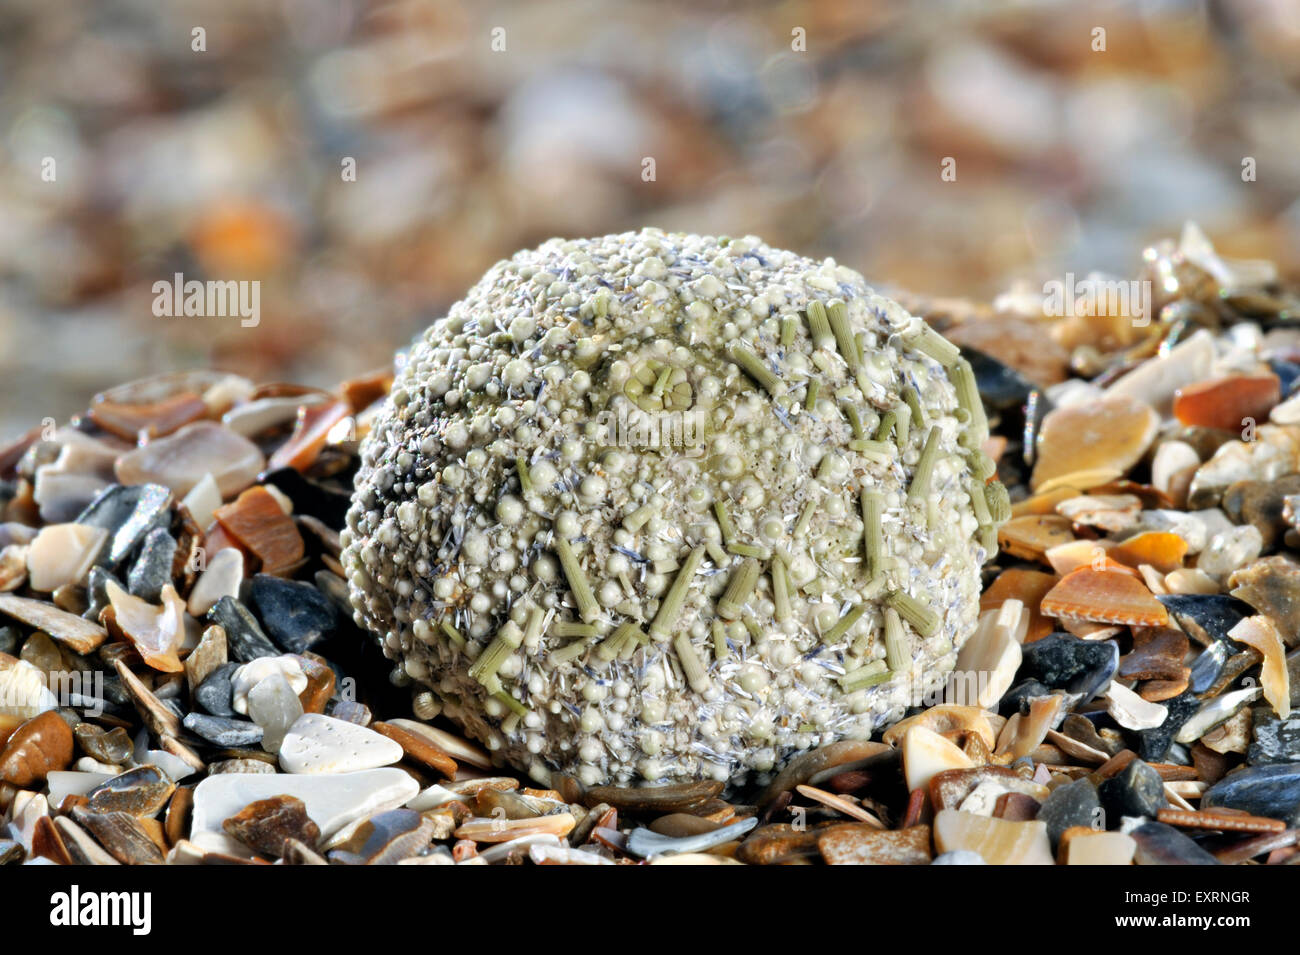 Seeigel grün / Ufer Seeigel (Psammechinus Miliaris) an Strand gespült Stockfoto